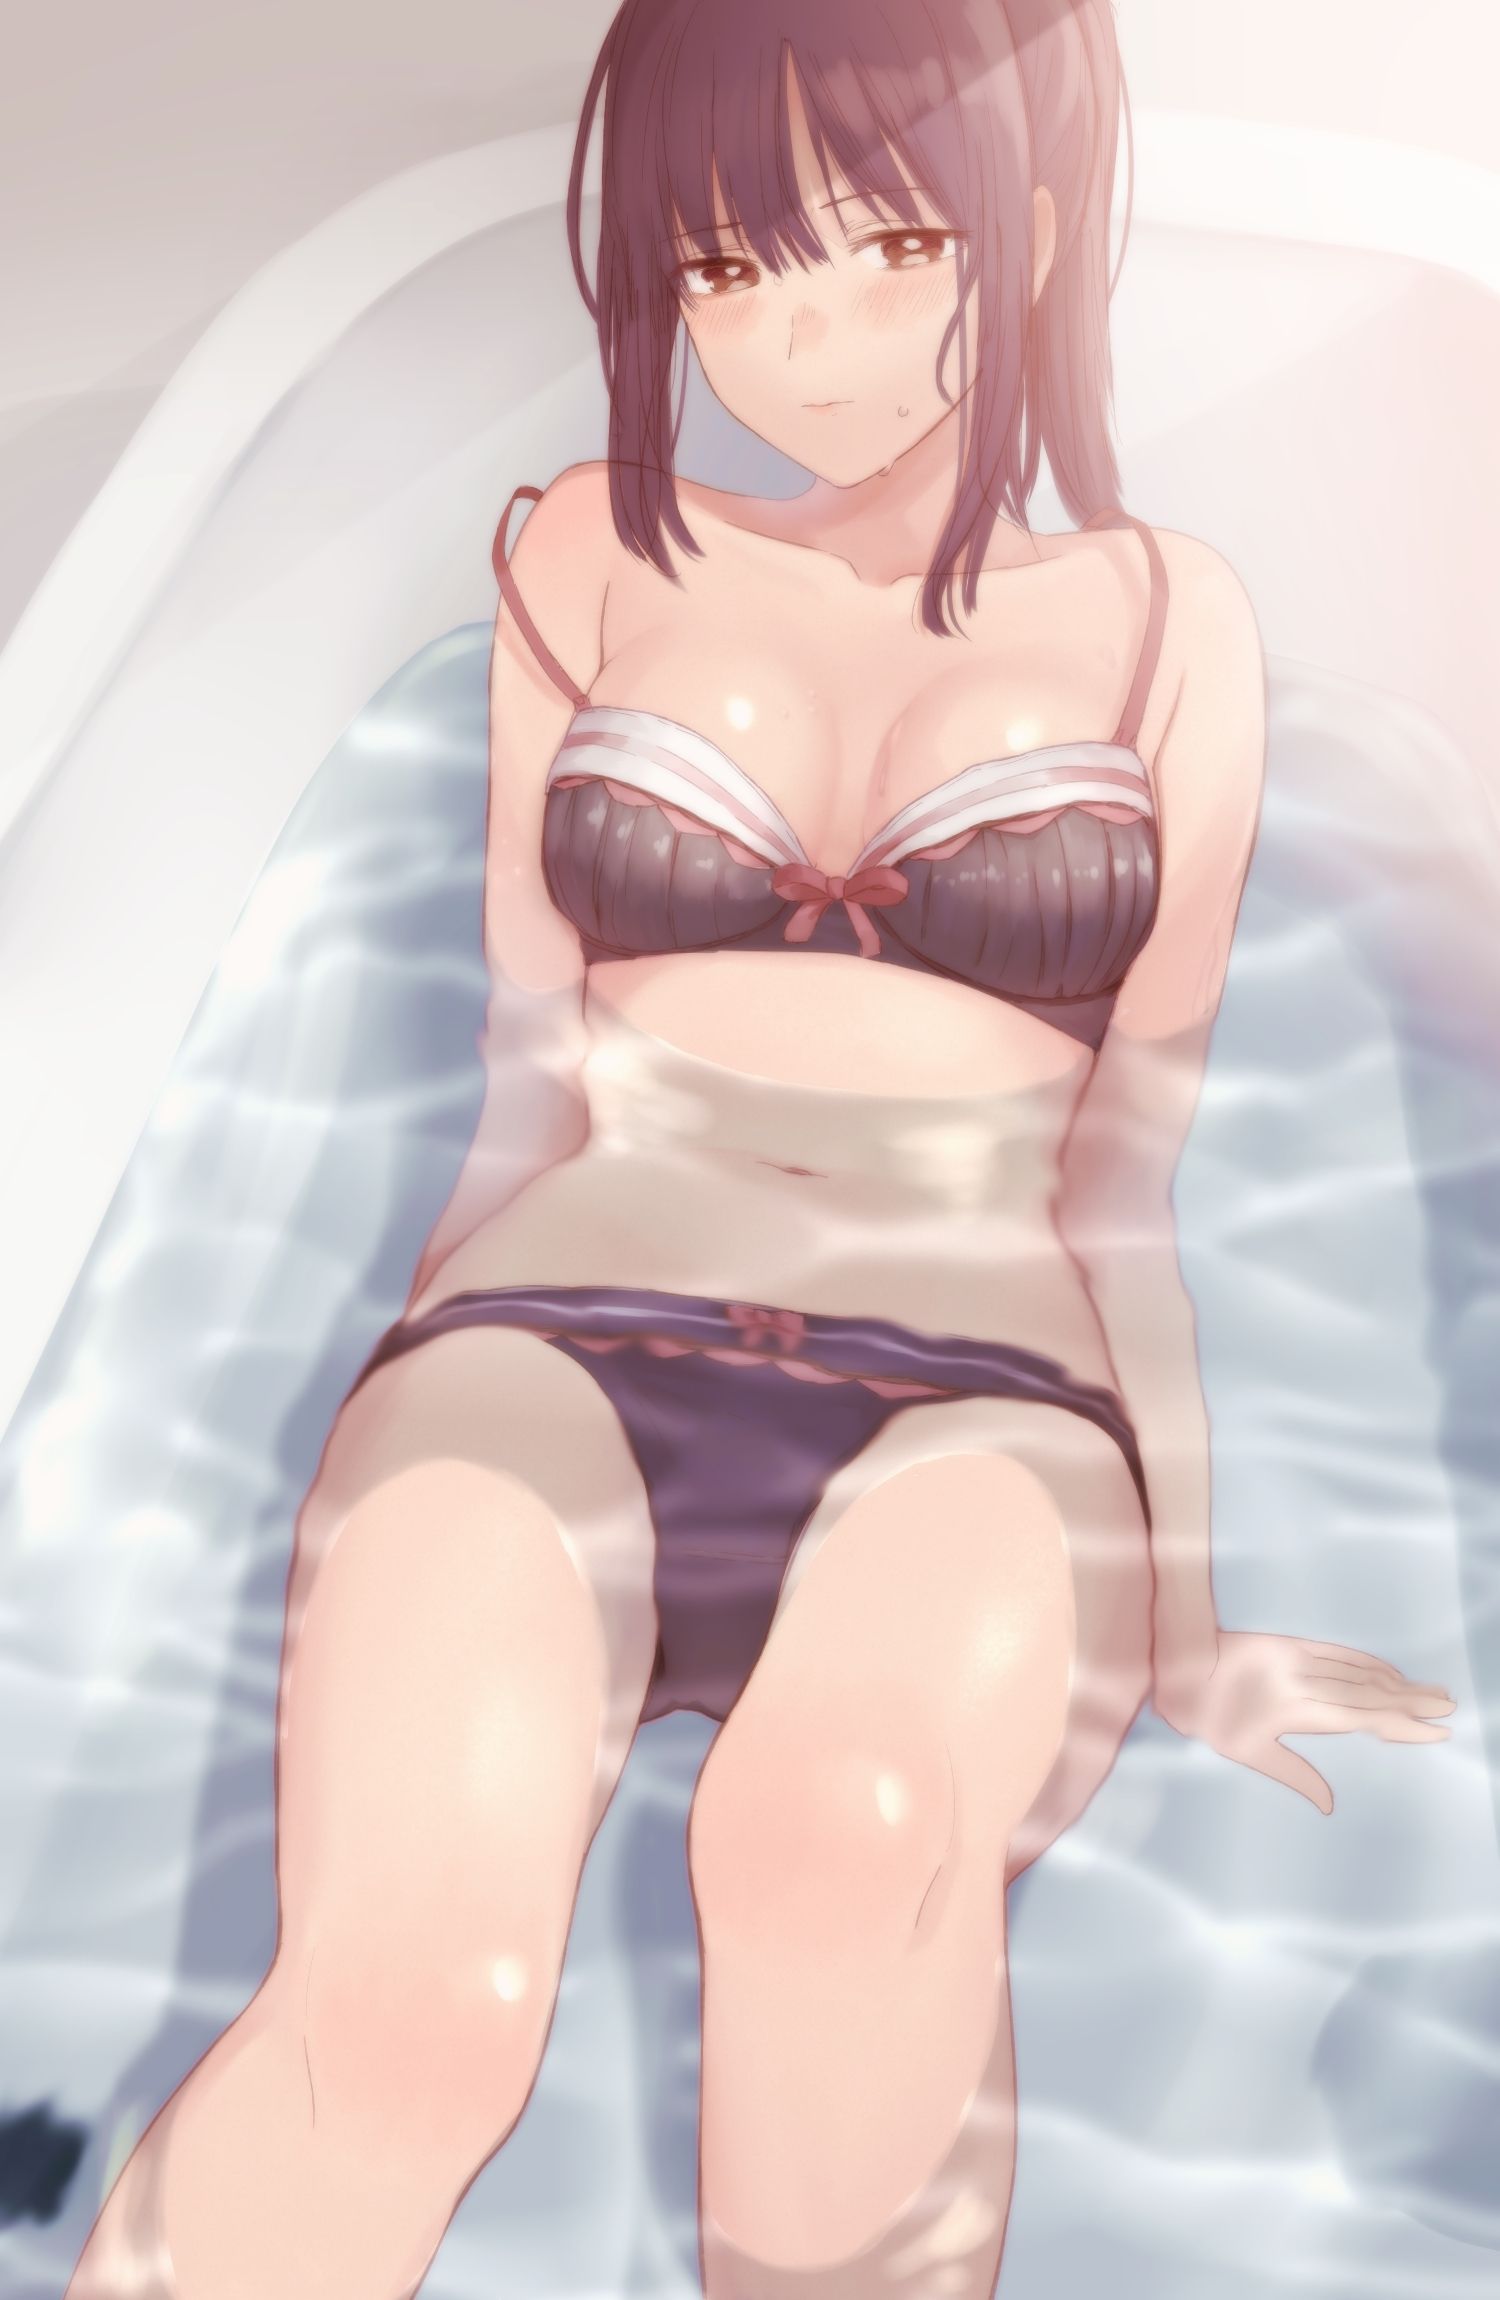 [Secondary erotic] erotic image of a girl exposing a body in the bath [50 photos] 42